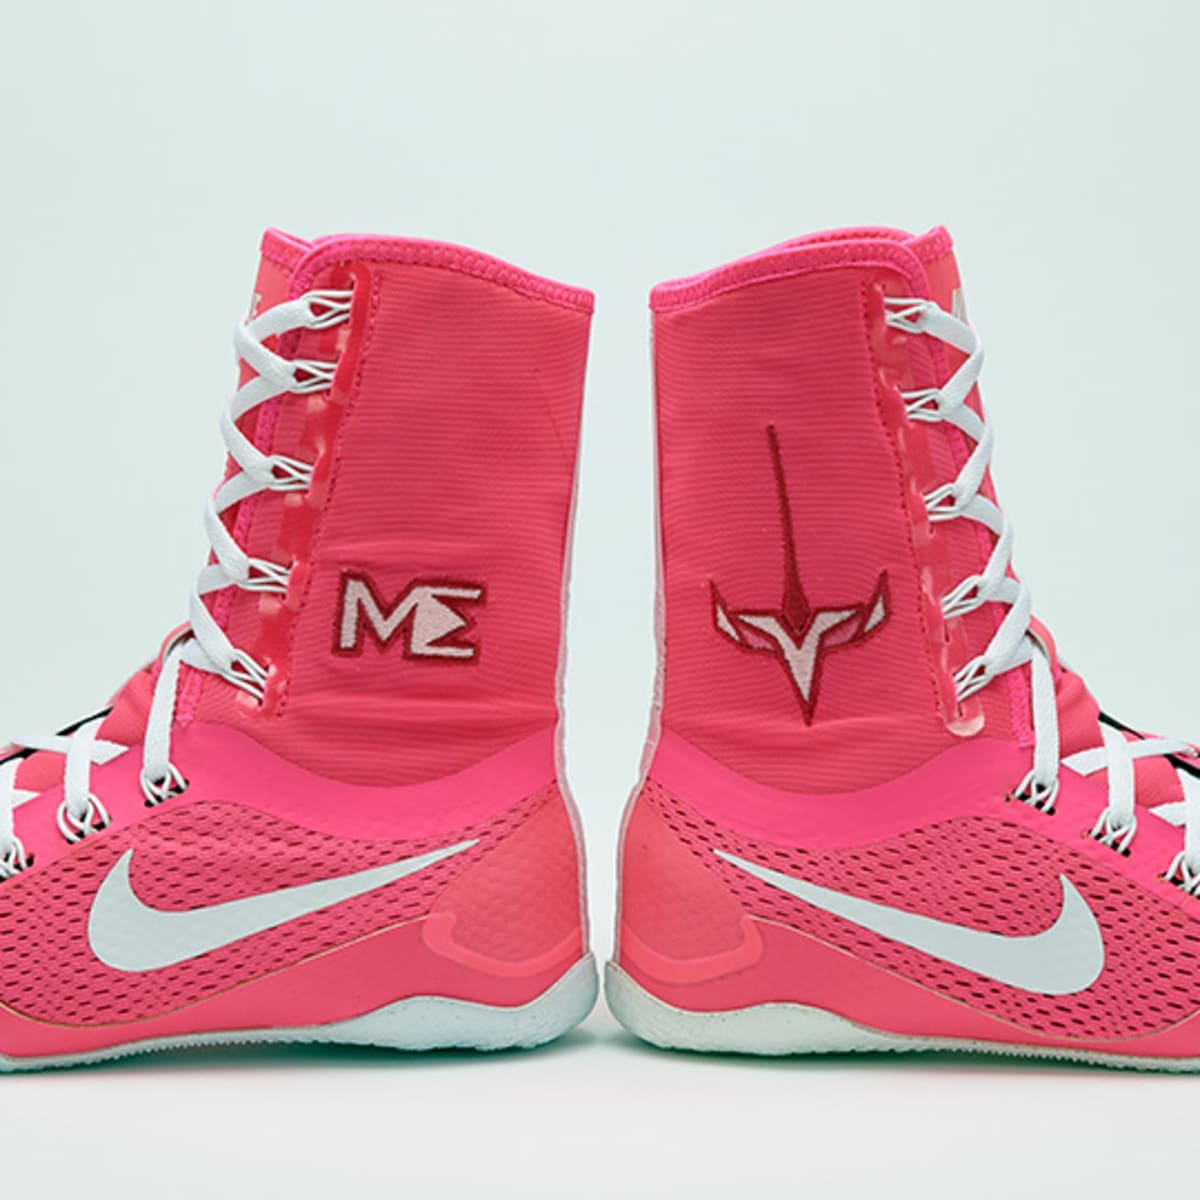 Nike ko Boxing Shoe. Pink Nike Boots. Nike Boxer Shoes. Найк бокс